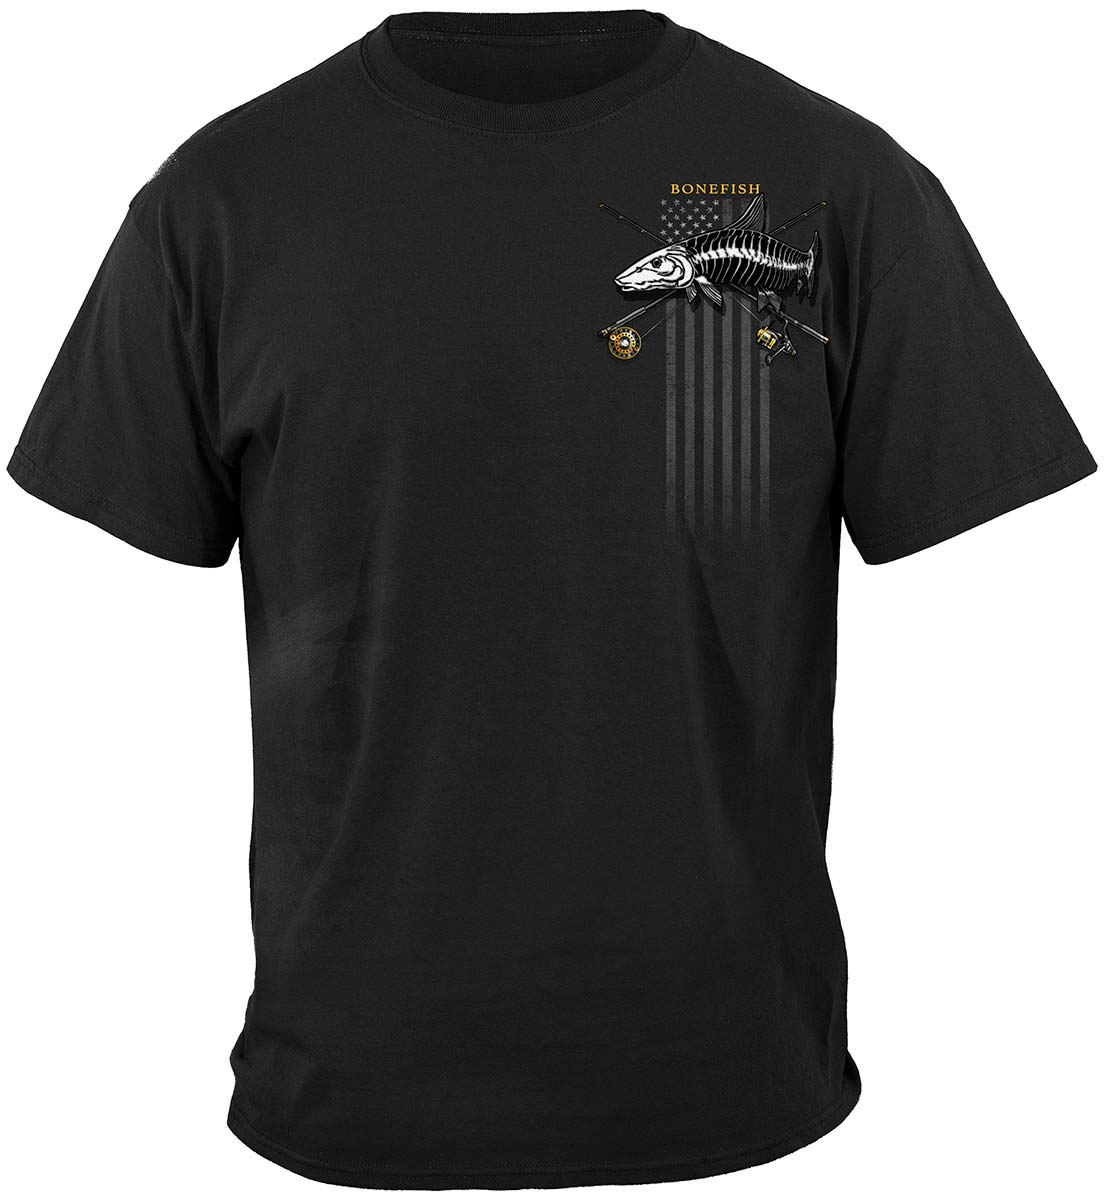 Black Flag Patriotic Bone Fish Premium Hooded Sweat Shirt